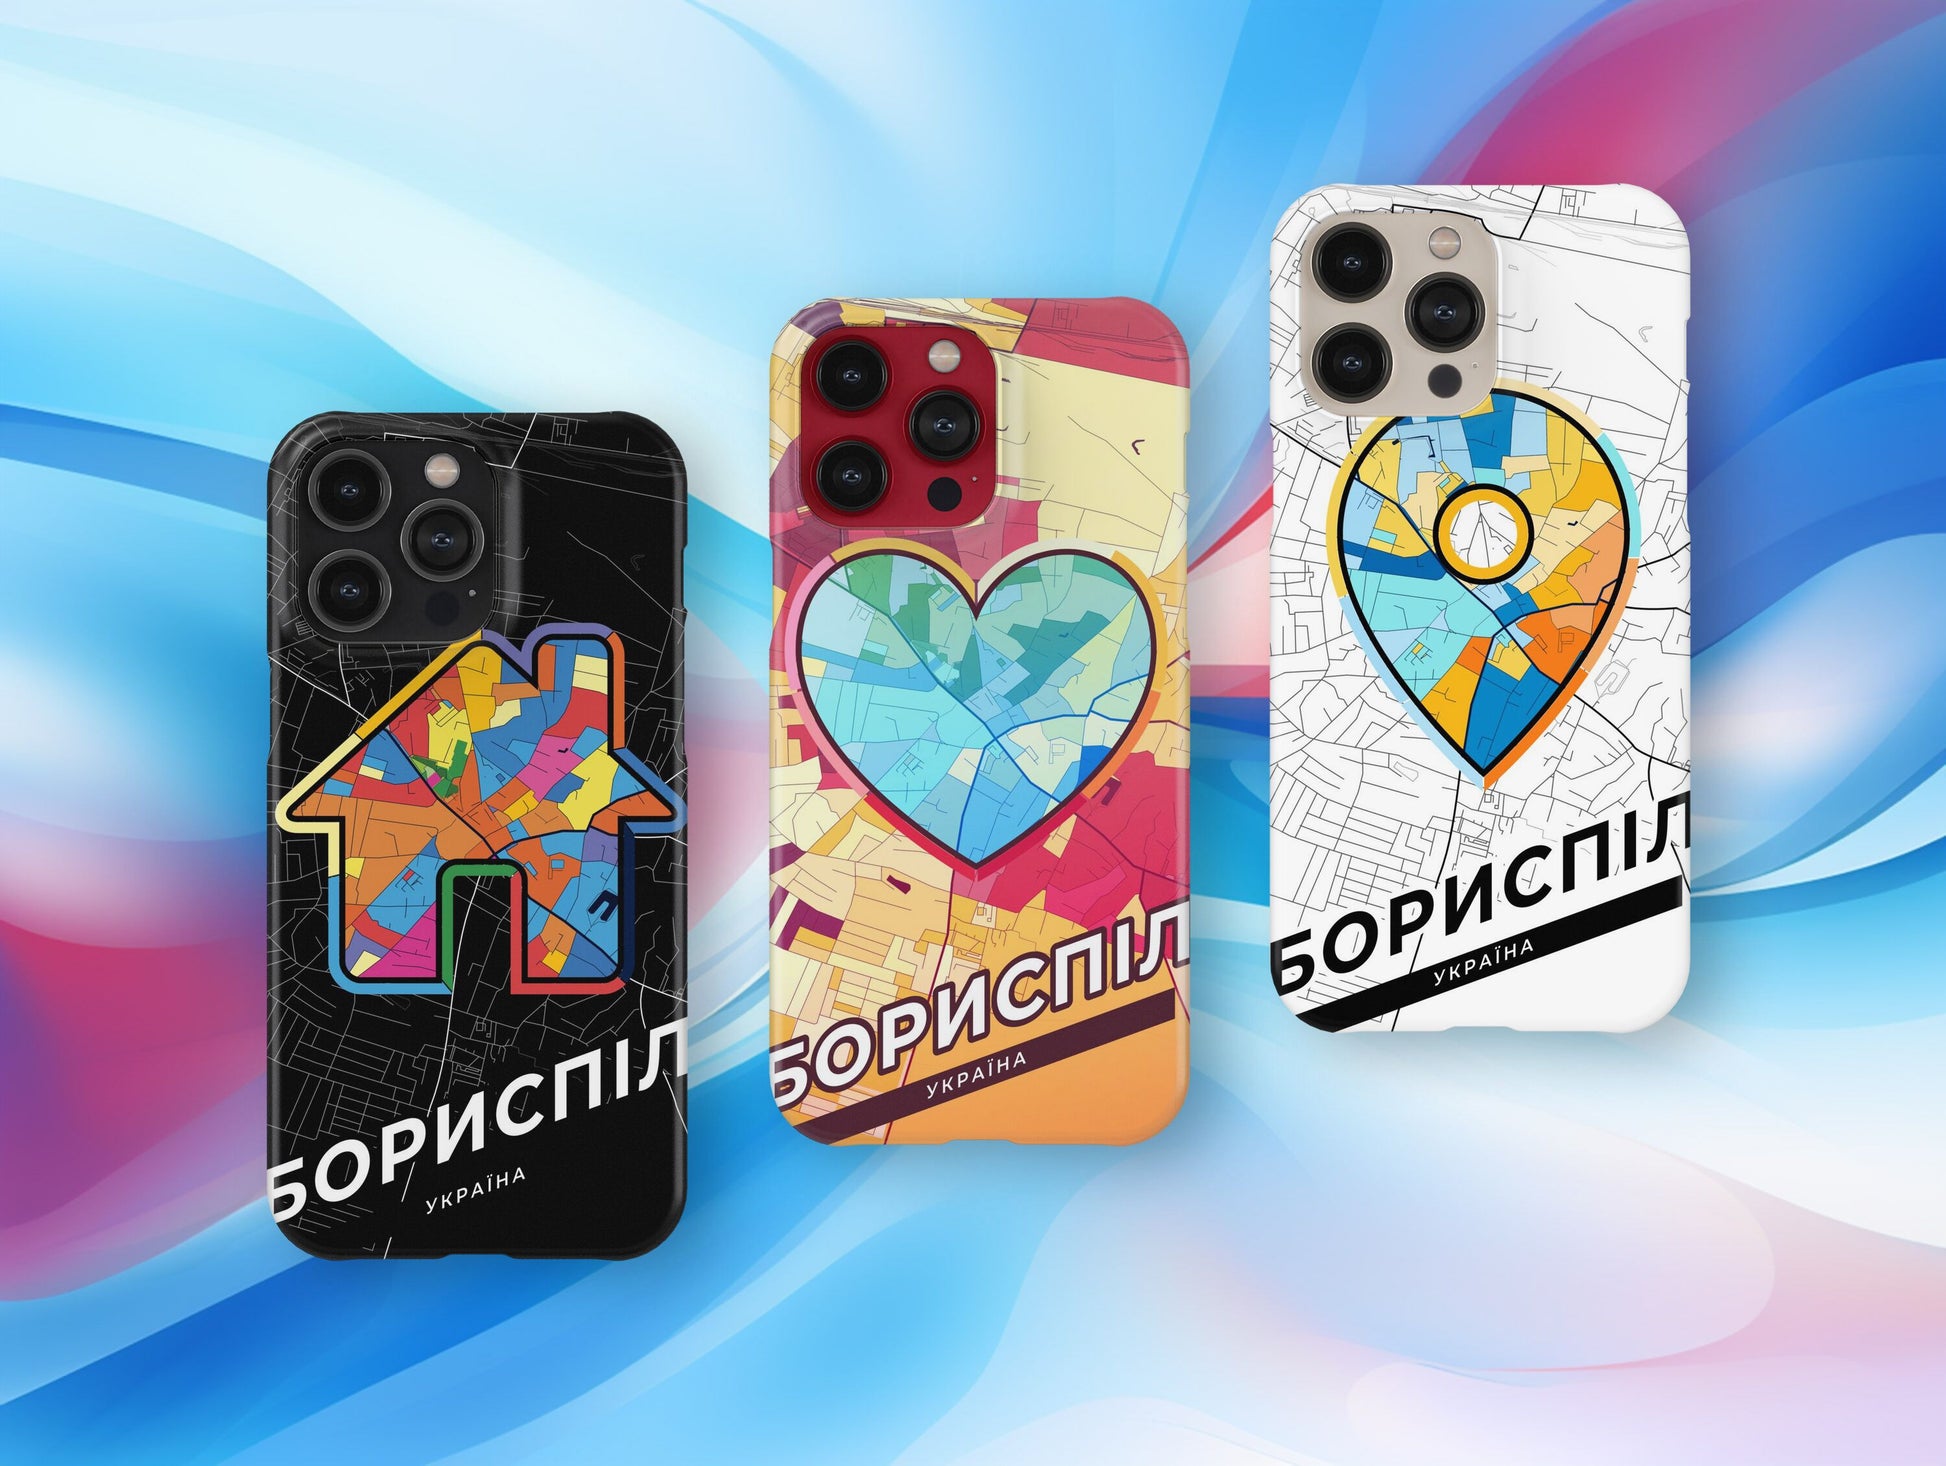 Boryspil Ukraine slim phone case with colorful icon. Birthday, wedding or housewarming gift. Couple match cases.